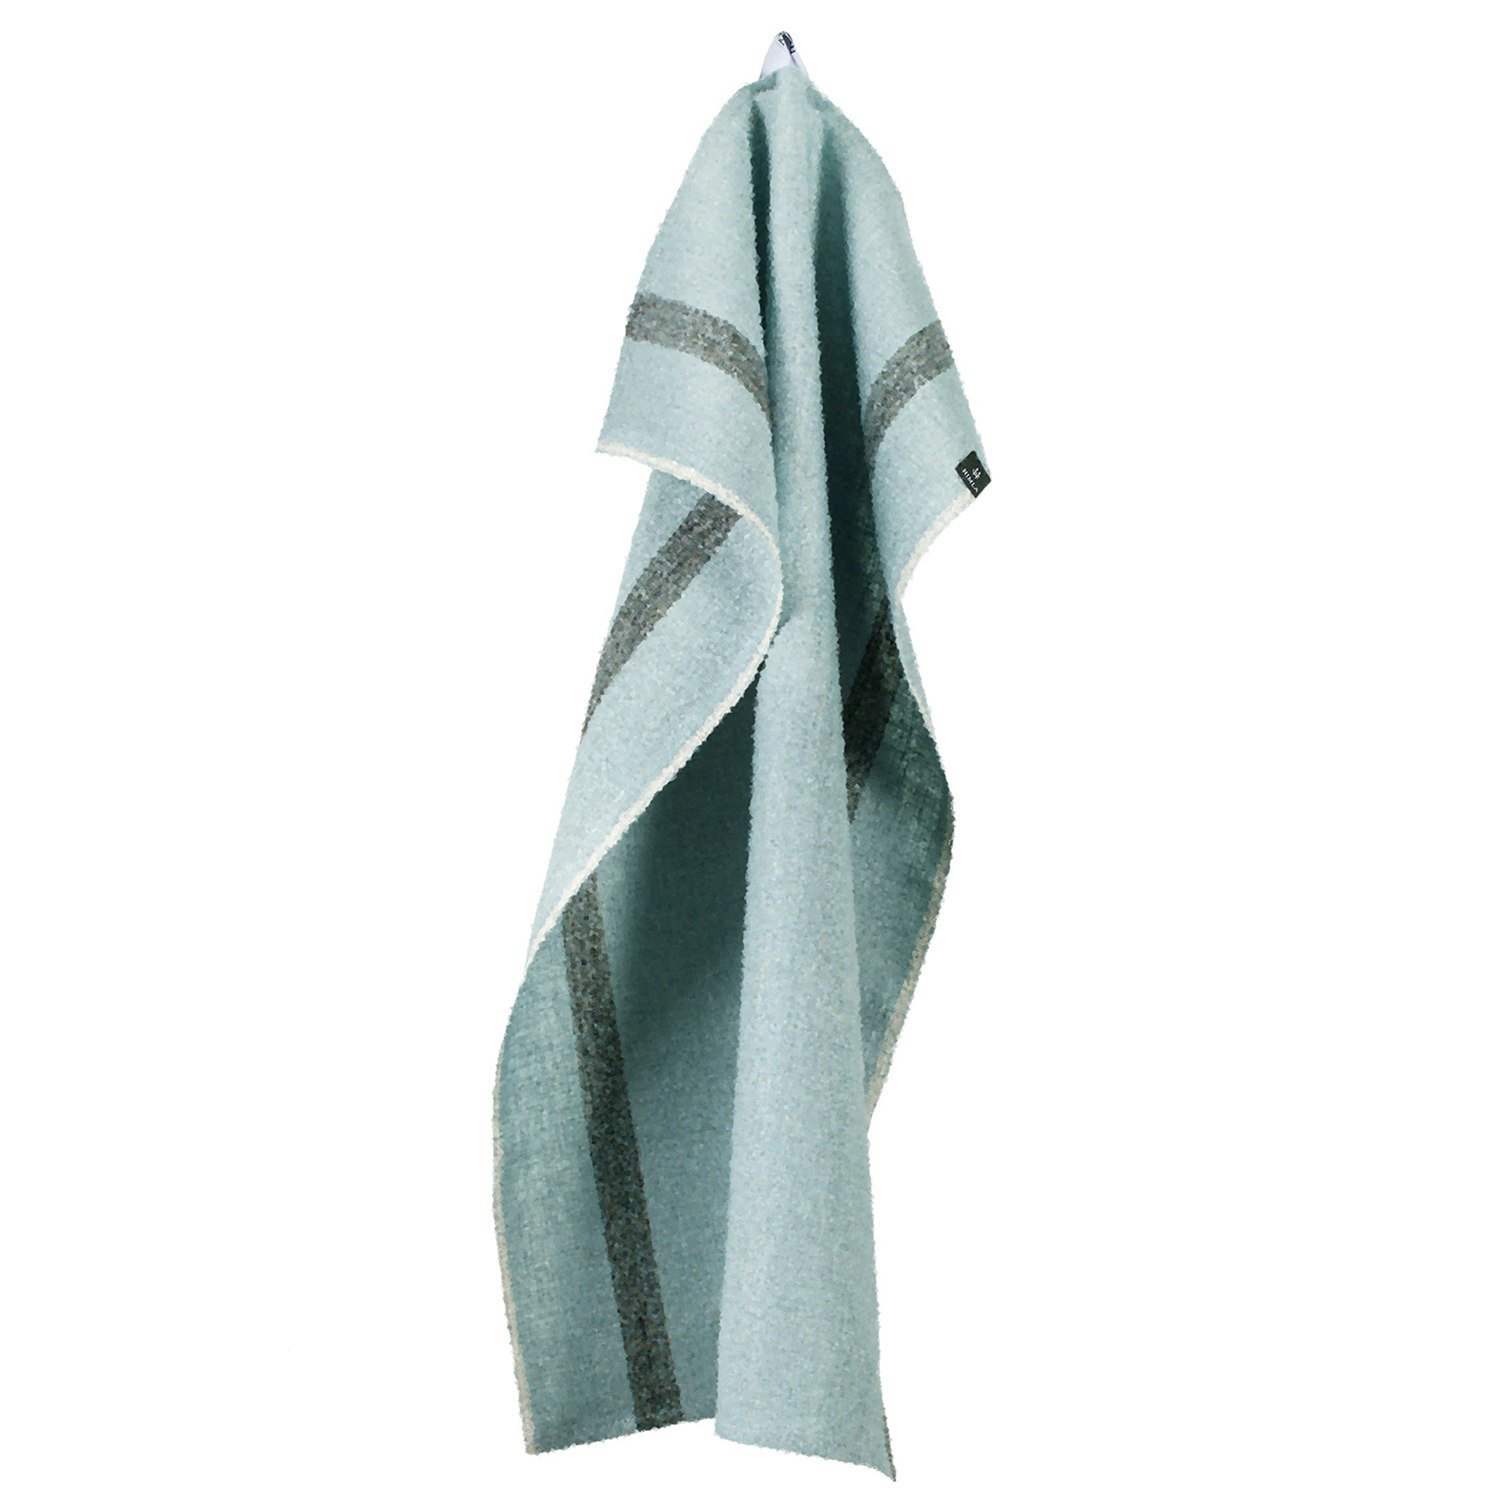 https://royaldesign.com/image/2/himla-nelly-kitchen-towel-50x70cm-3